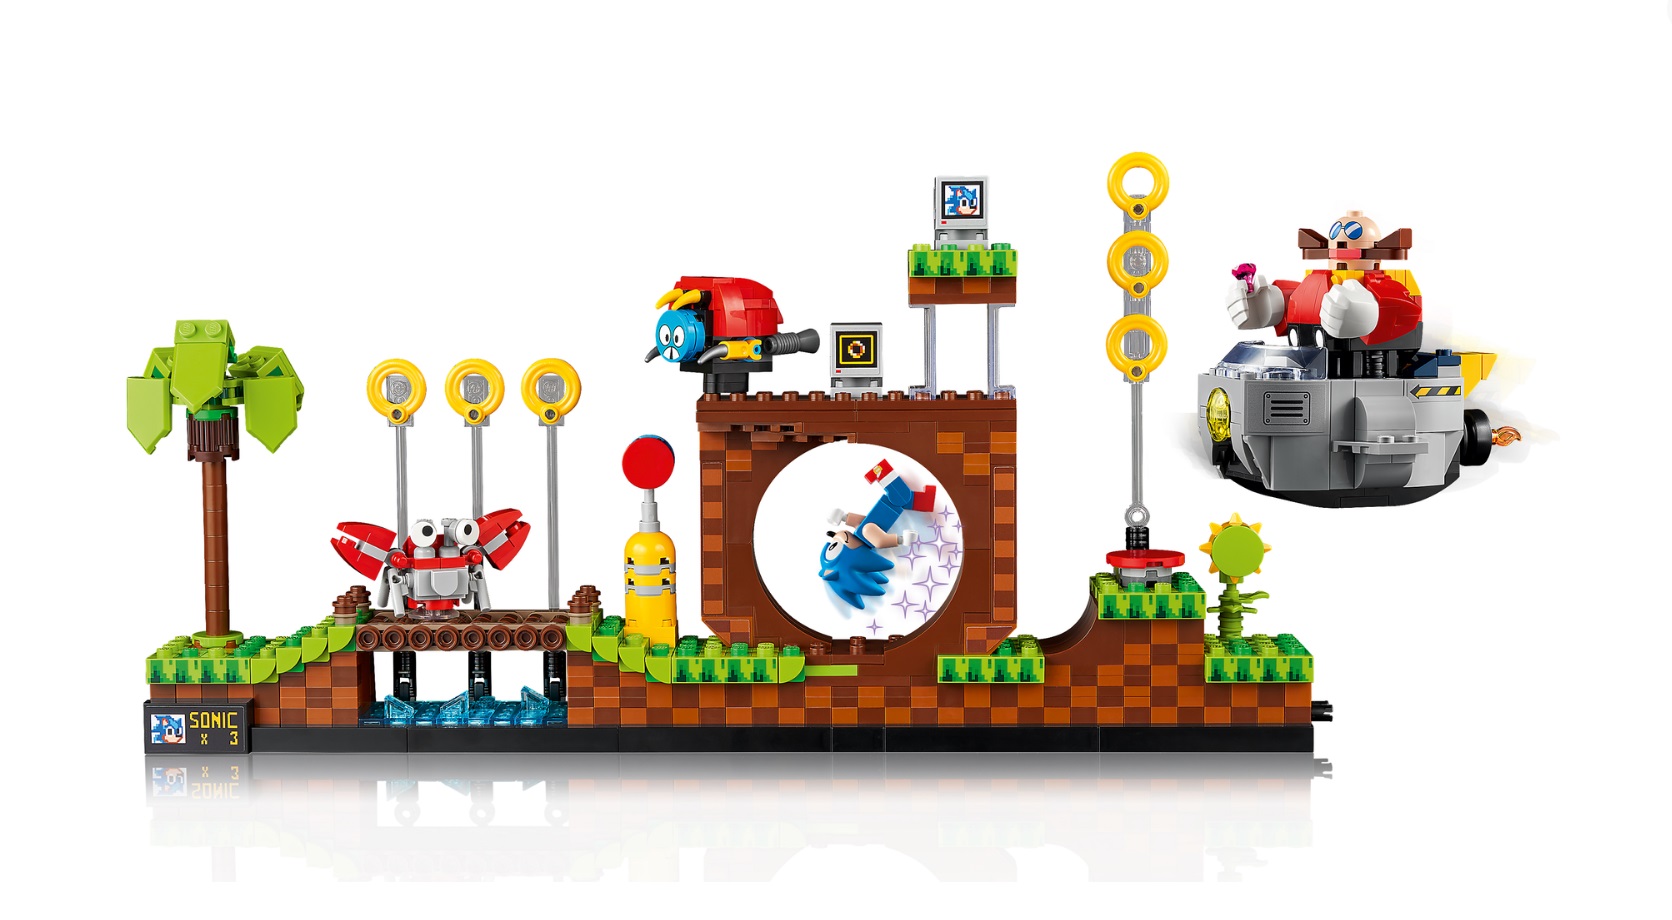 LEGO Sonic the Hedgehog set announced